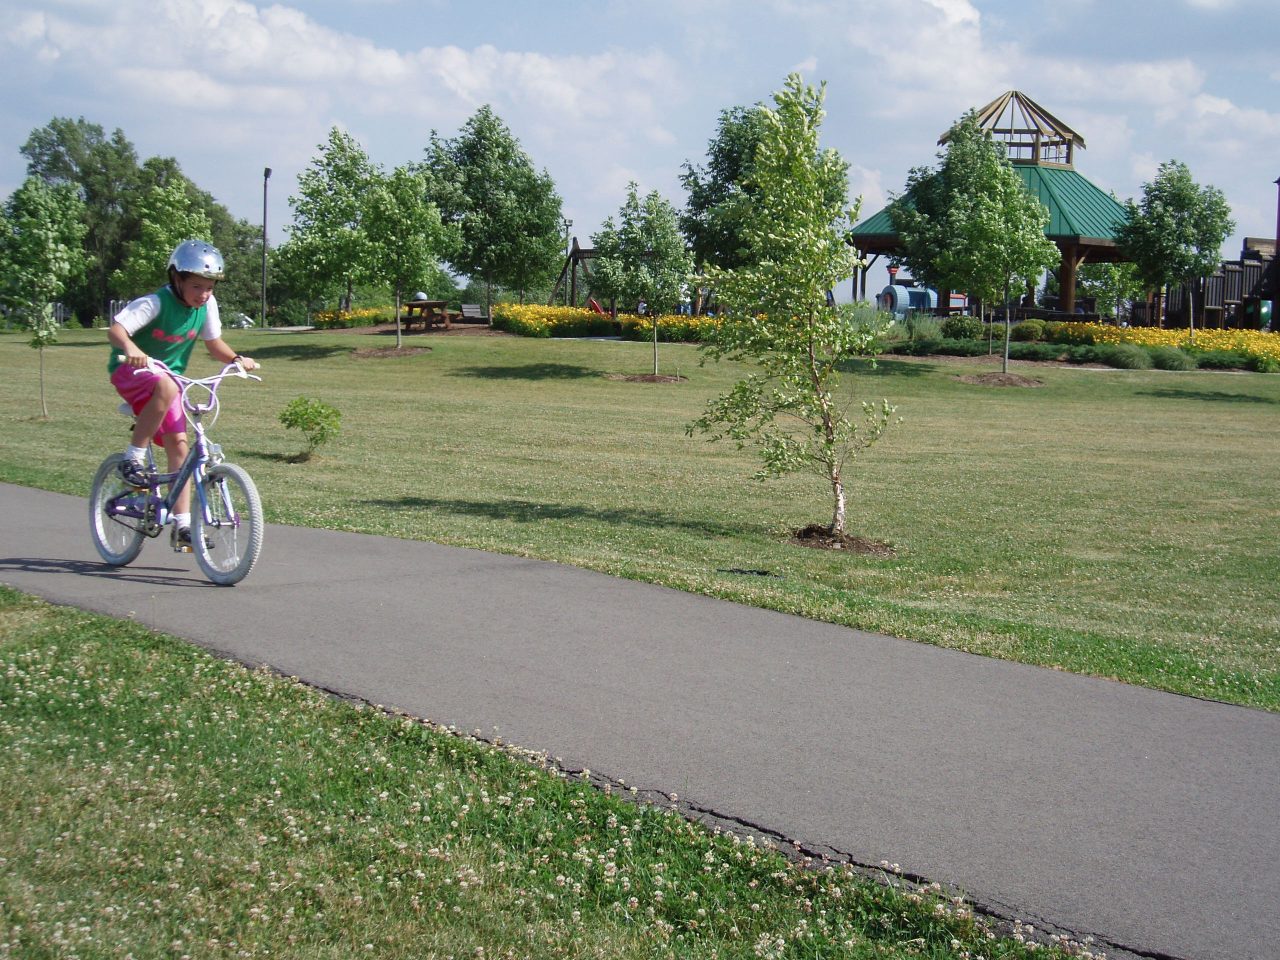 Child on bike at Indian Trails park